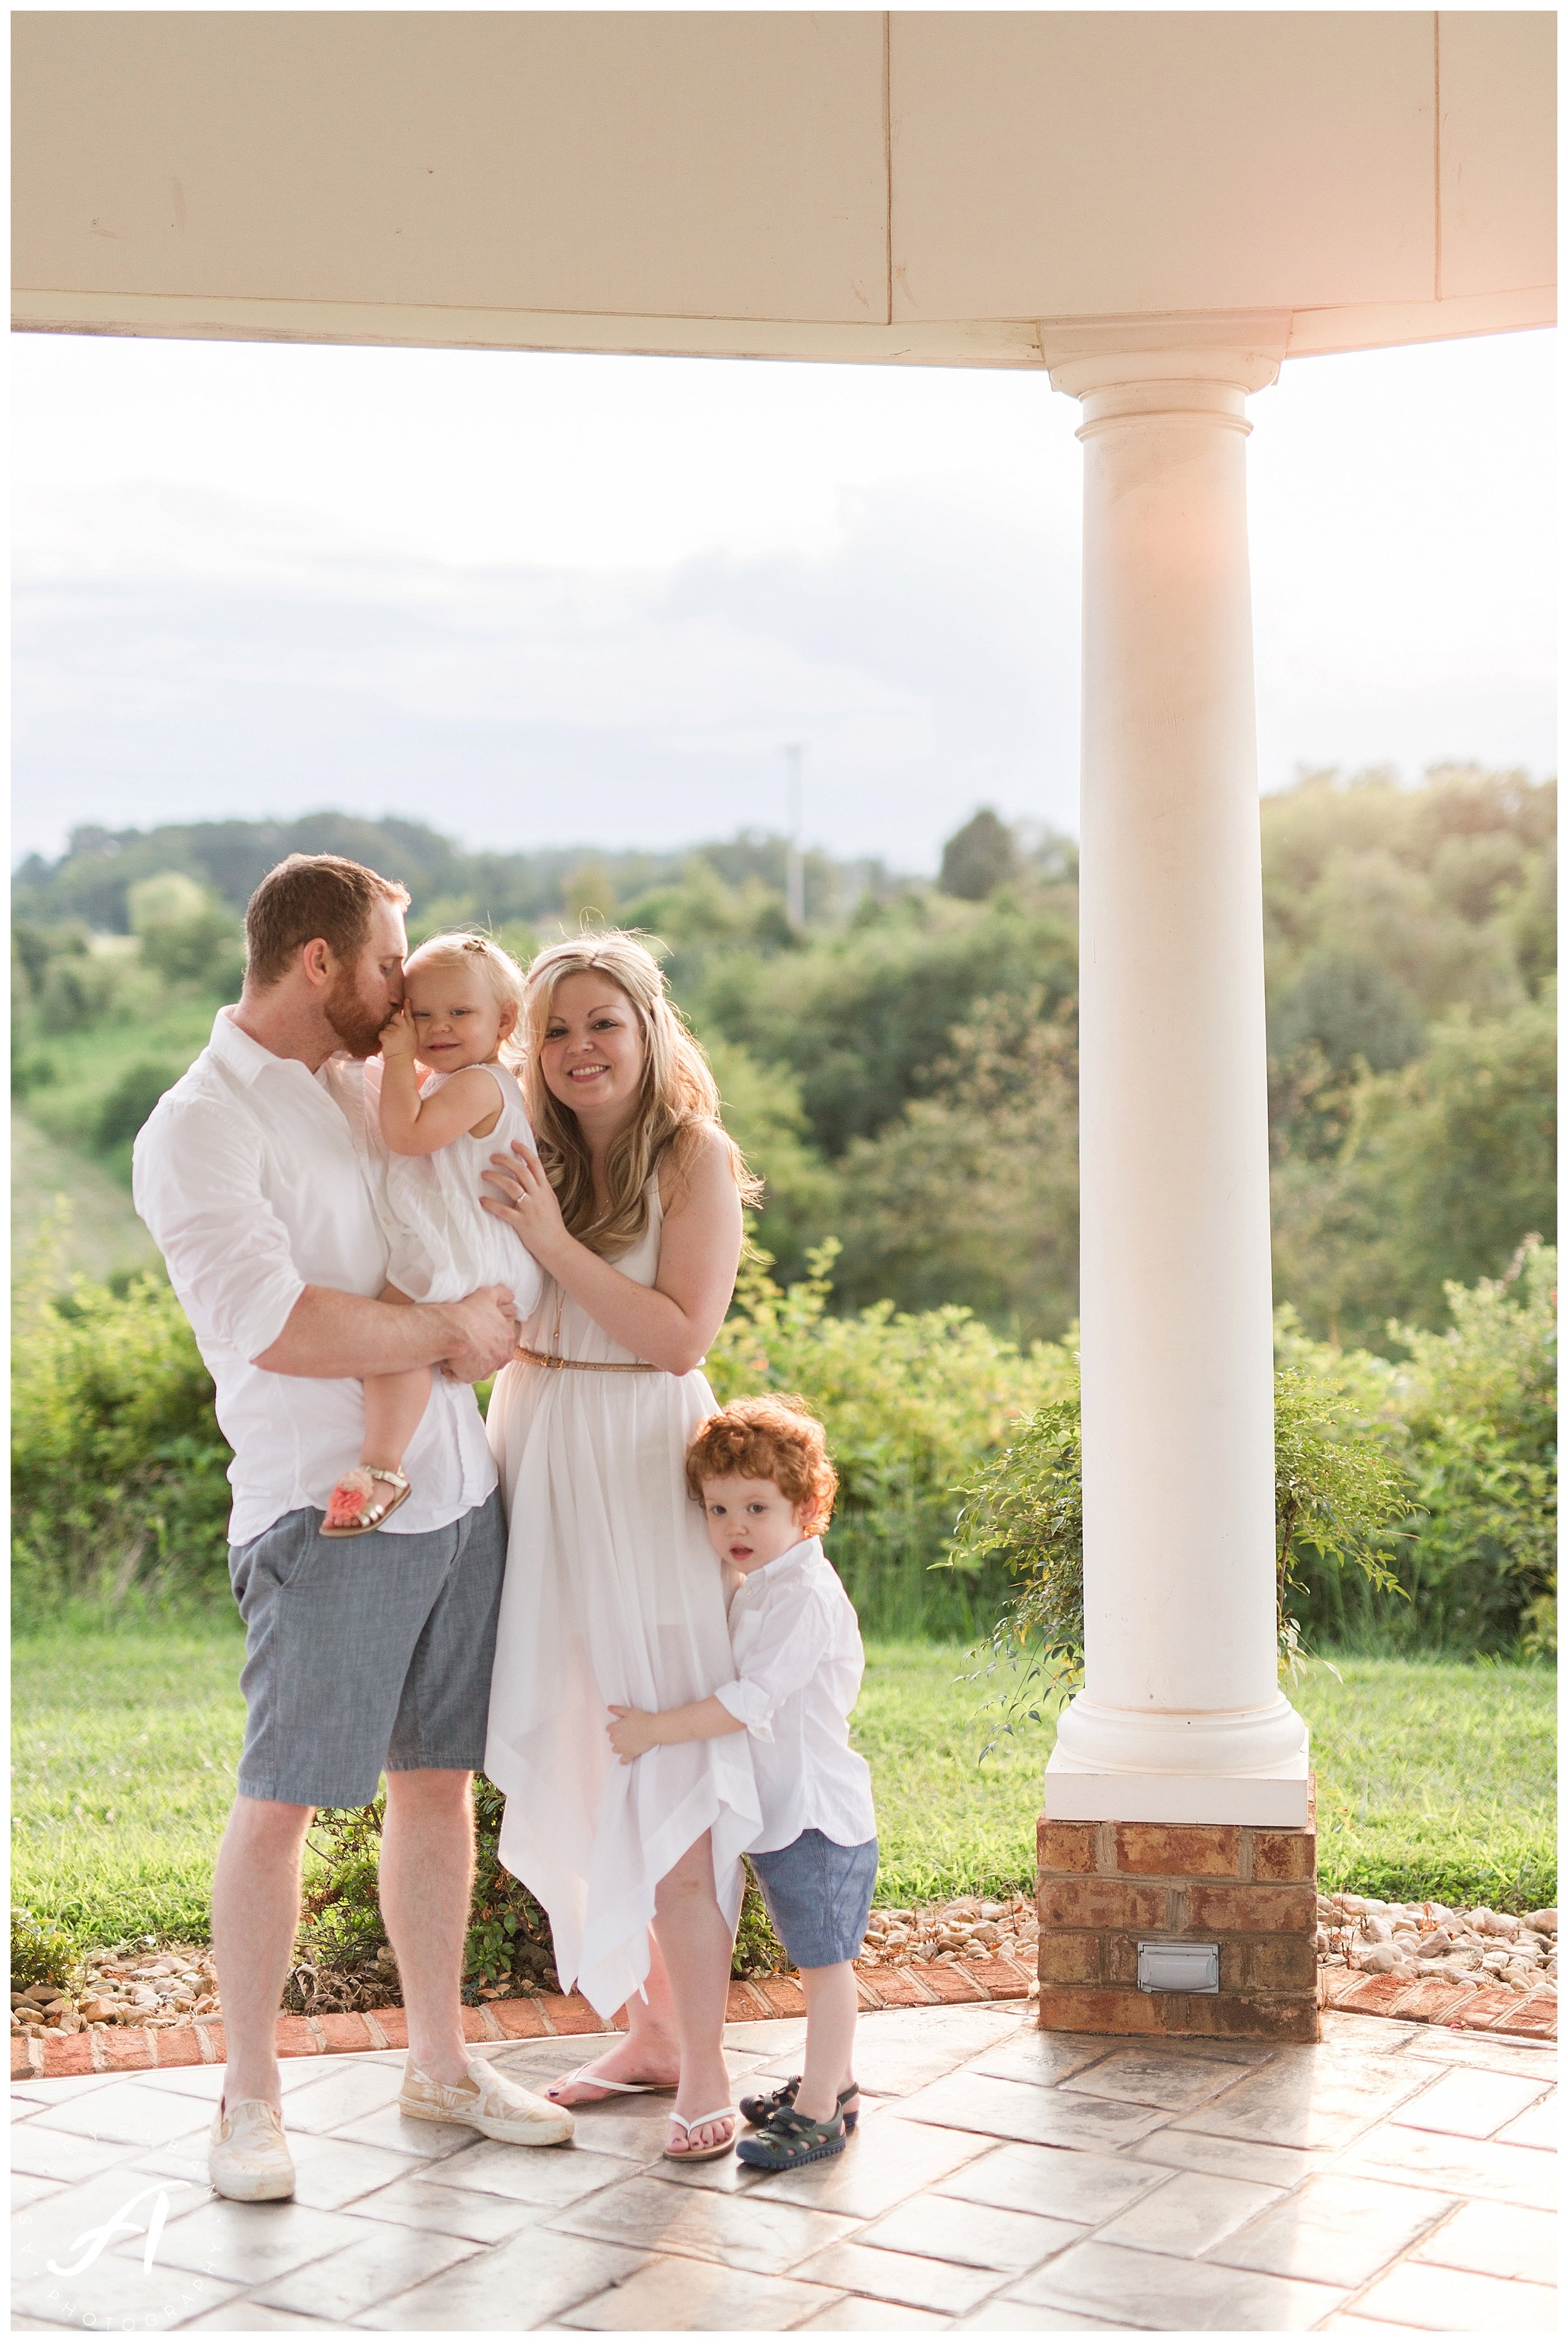 Lynchburg Virginia Family Photographer || Central VA Wedding and Portrait Photographer || Ashley Eiban Photography || www.ashleyeiban.com